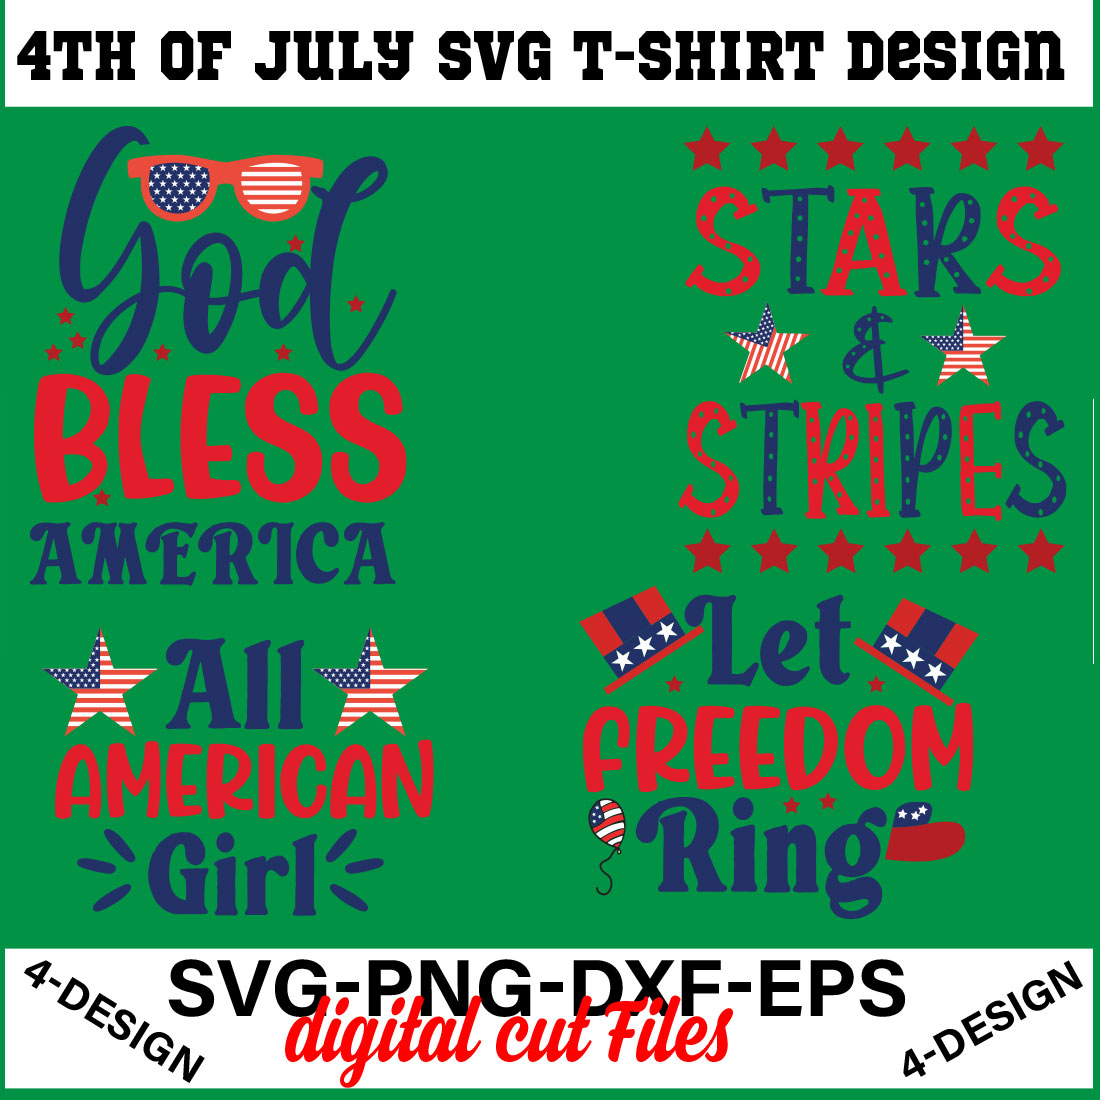 4th of July SVG Bundle, July 4th SVG, Fourth of July svg, America svg Volume-01 cover image.